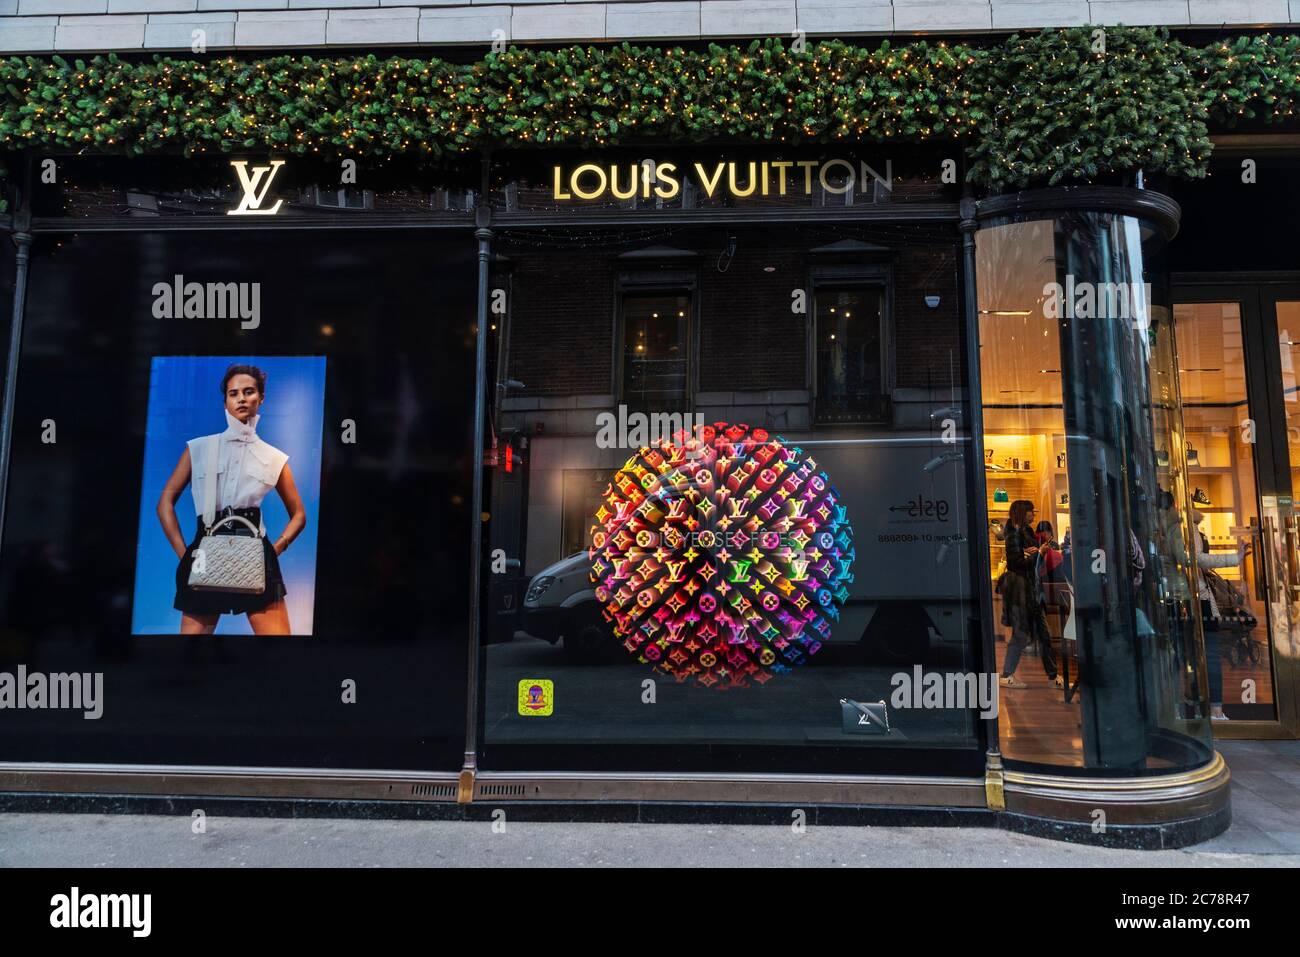 Louis Vuitton window display. Based on original sketches of Gaspar